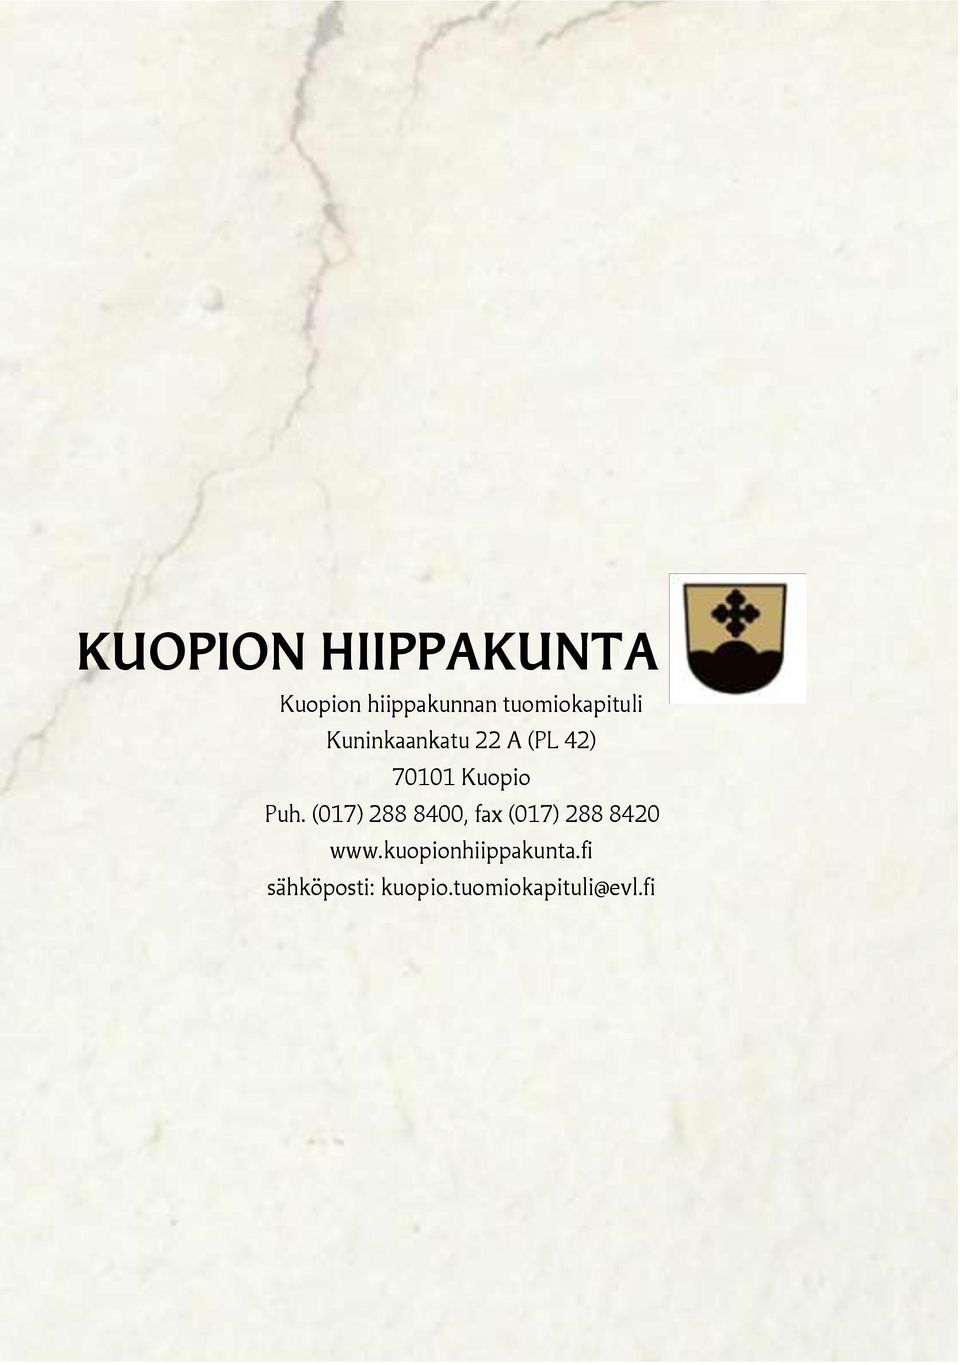 Kuopio Puh. (017) 288 8400, fax (017) 288 8420 www.